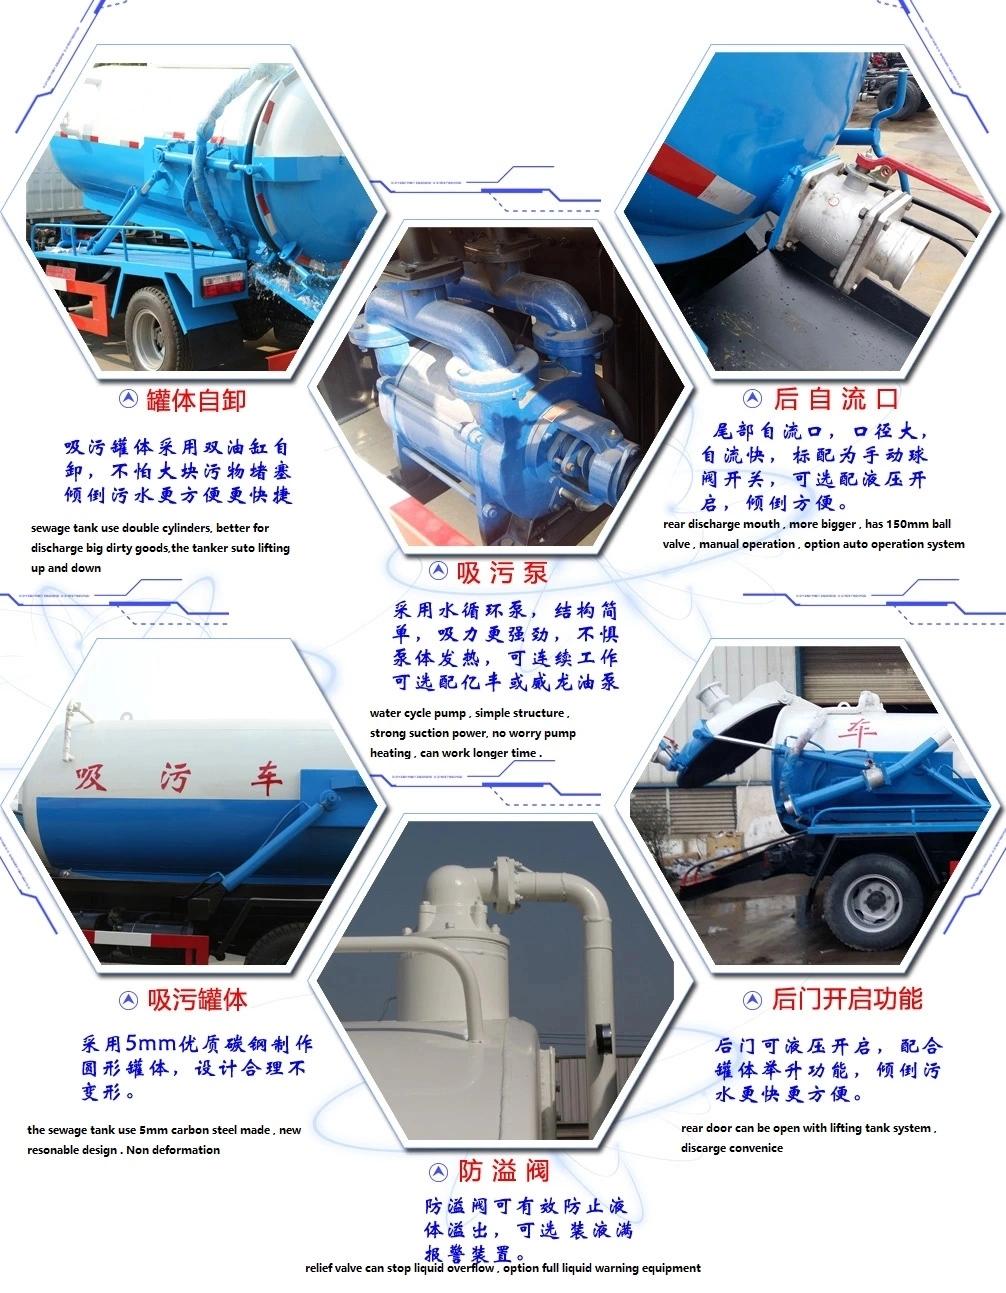 8X4 Shacman 20000liters Vacuum Sewage Suction Truck